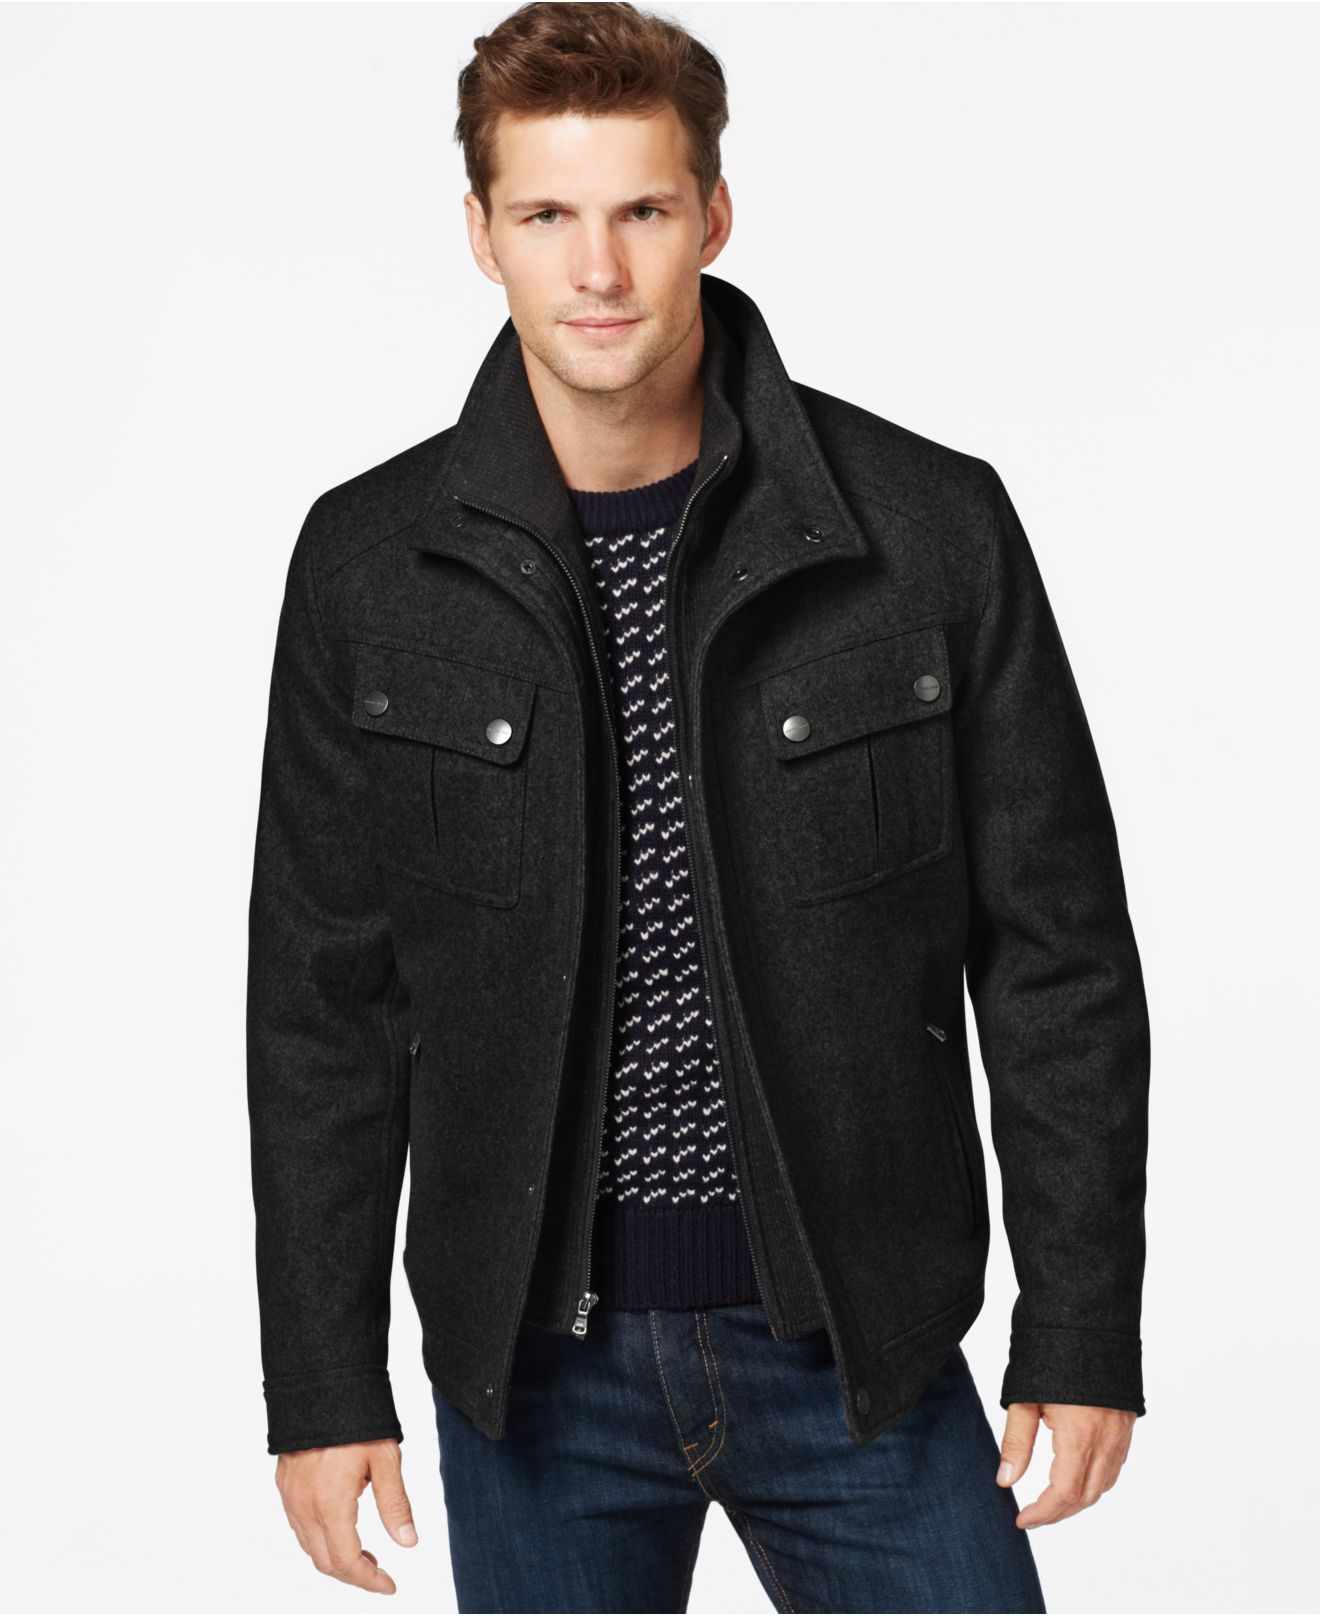 Lyst - Michael Kors Michael Brockton Wool-blend Jacket in Black for Men